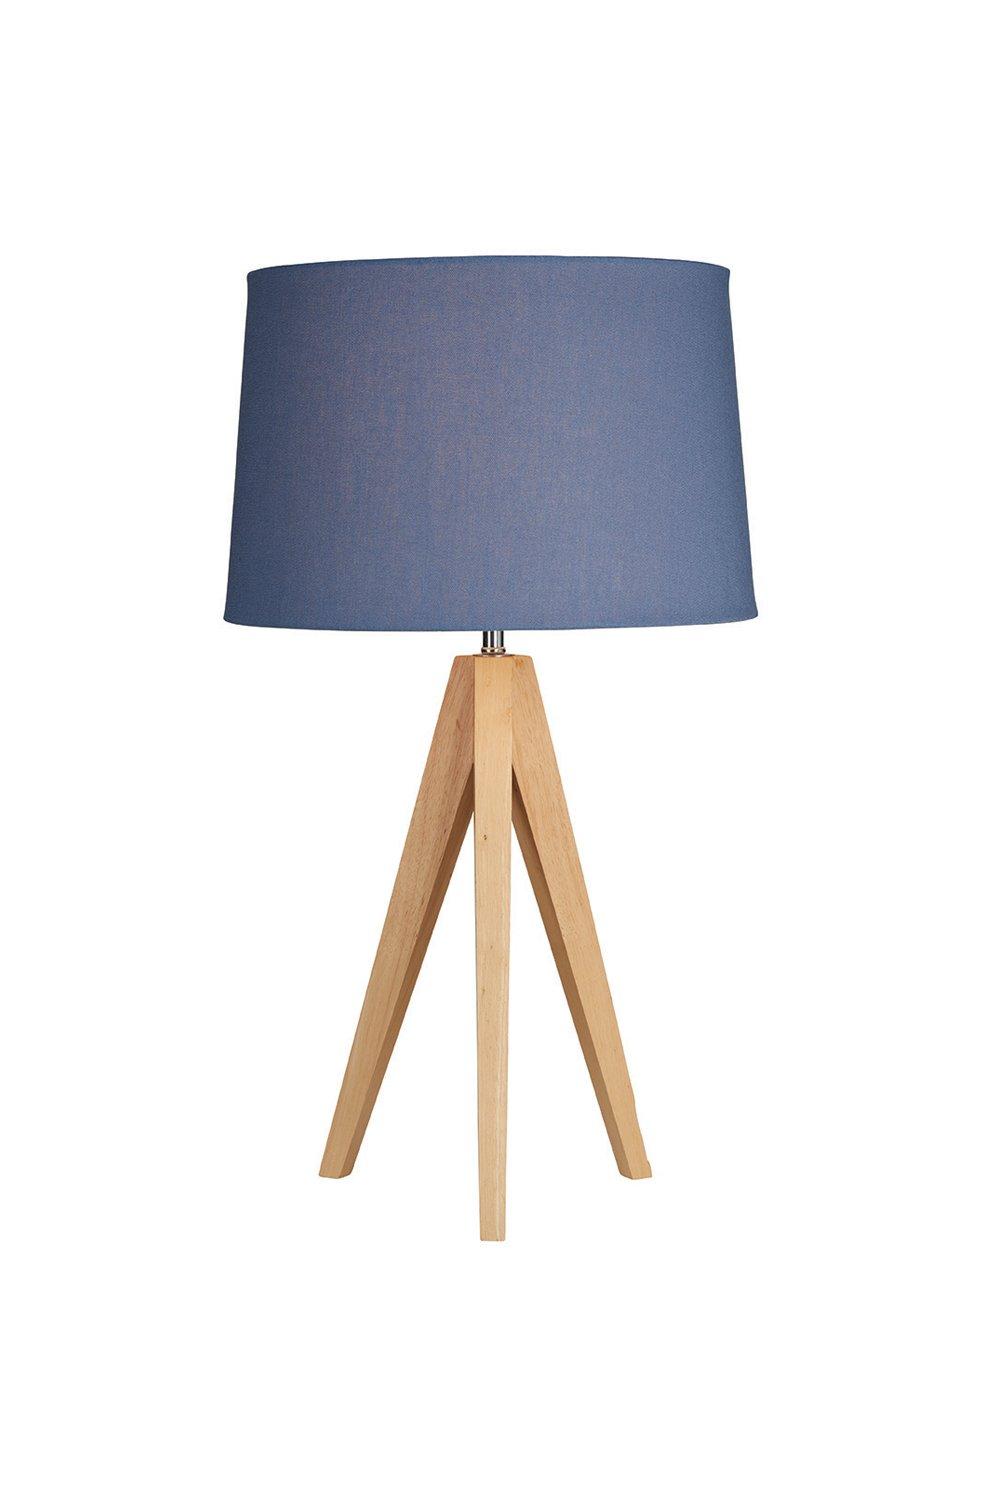 'Wooden Tripod' Table Lamp Denim